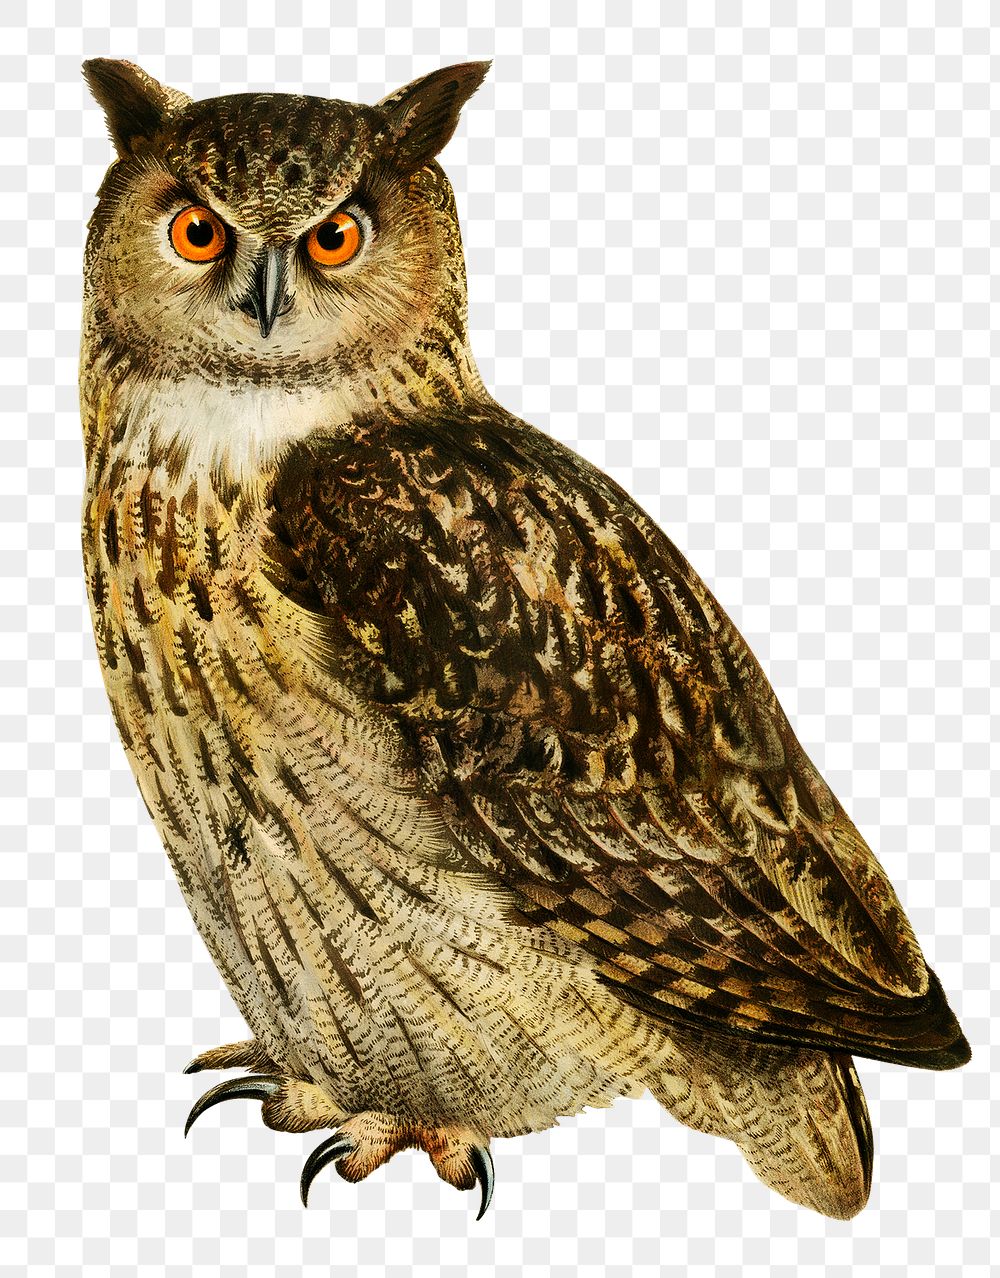 Transparent sticker eaurasian eagle owl bird hand drawn